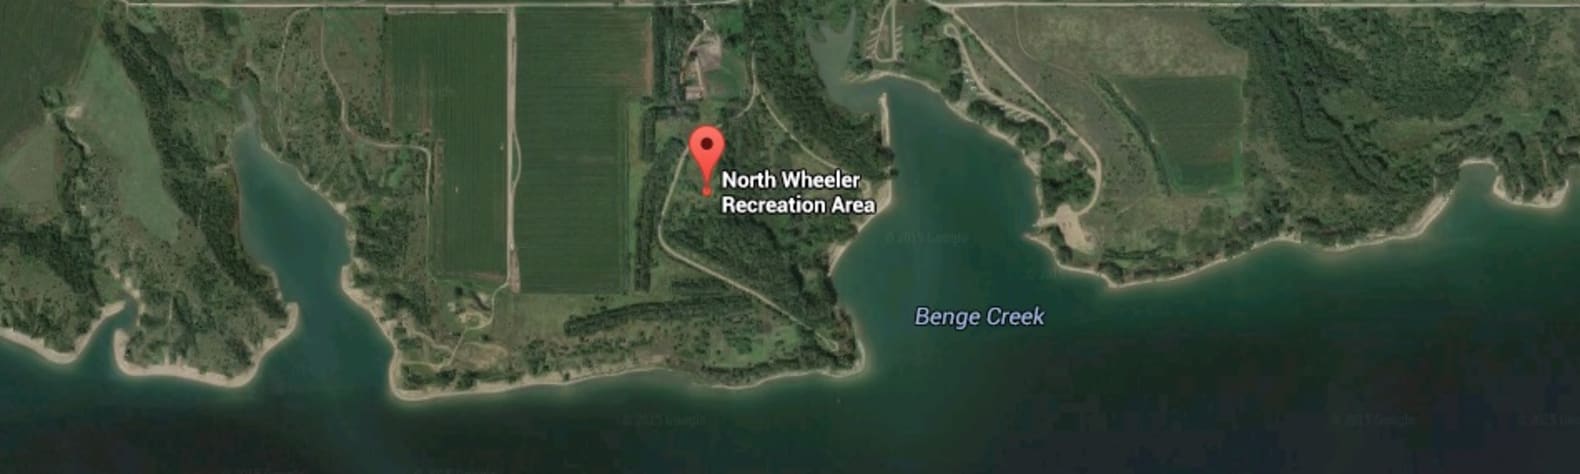 North Wheeler Recreation Area